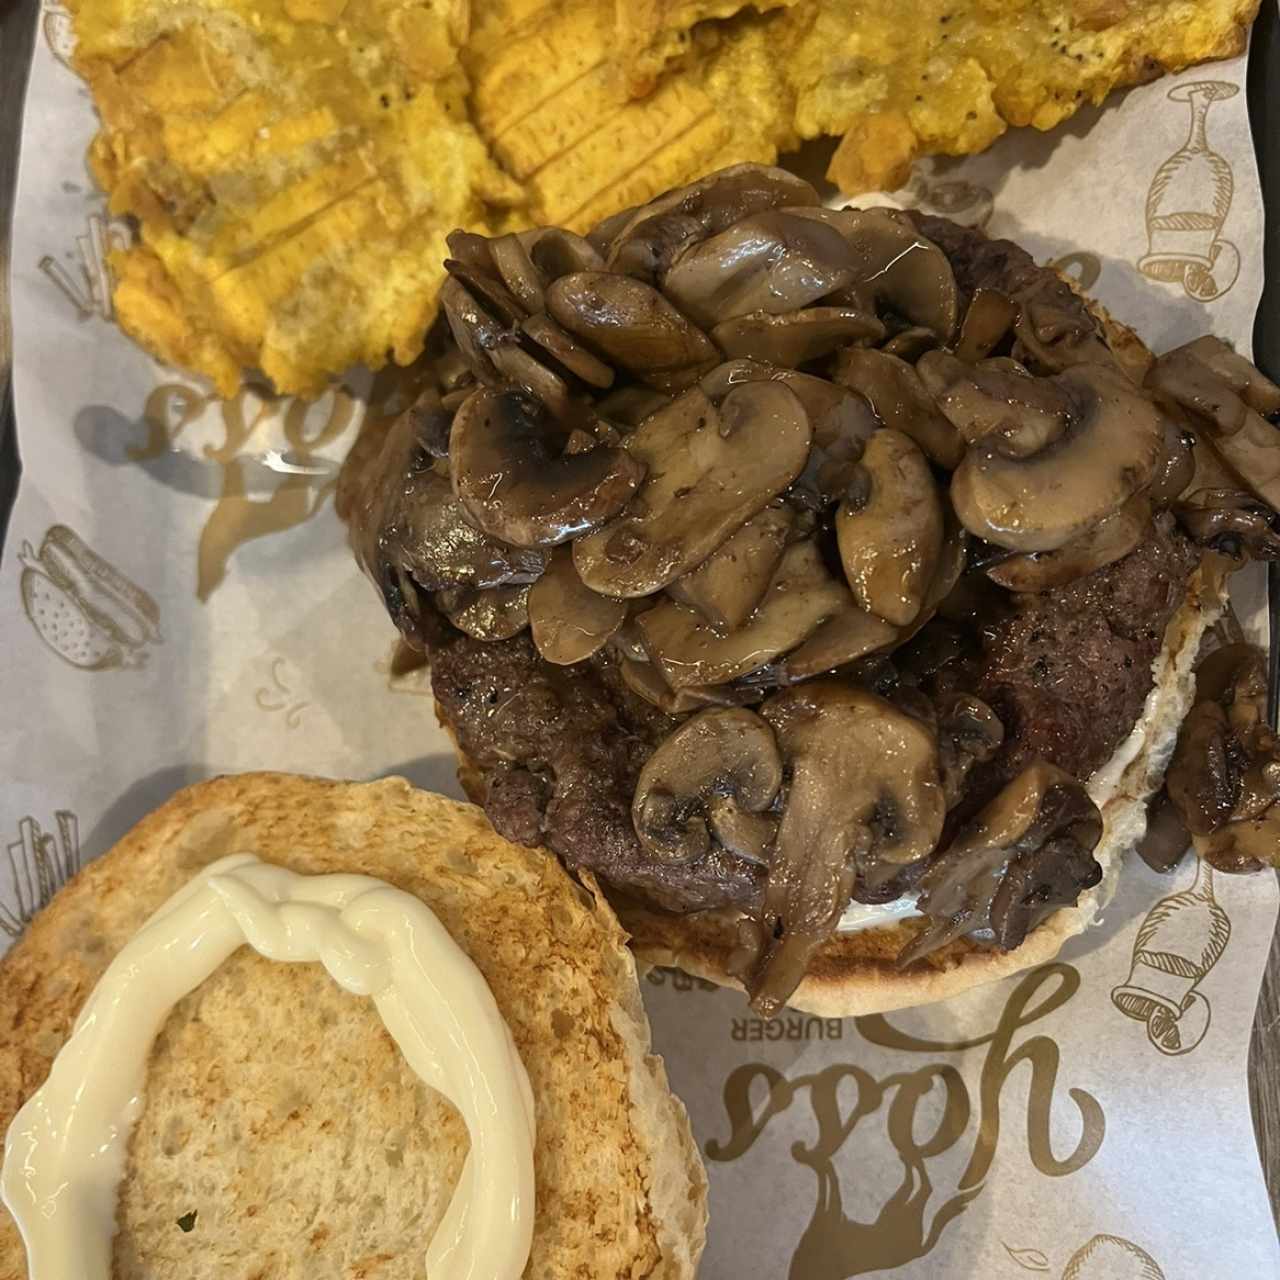 Mushroom burger